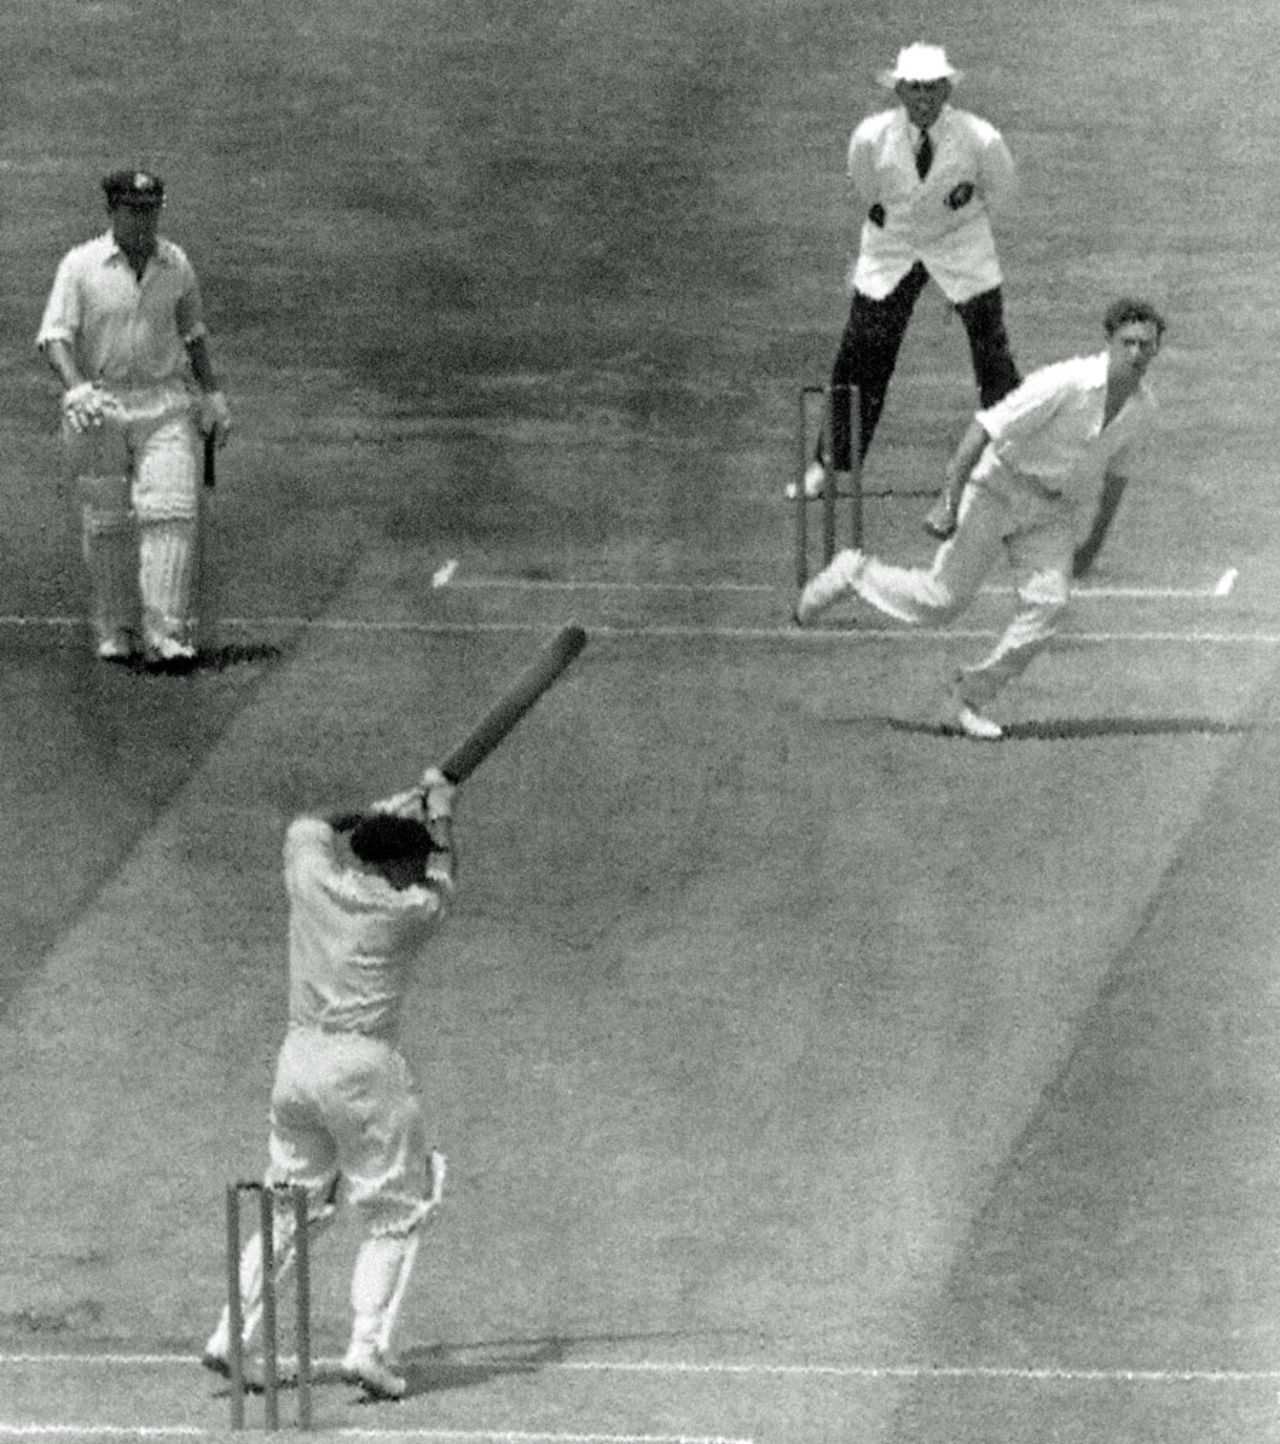 Les Favell cuts a ball Brian Statham as his team-mate Arthur Morris looks on, Australia v England, 3rd Test, MCG, 2nd day, January 1, 1955